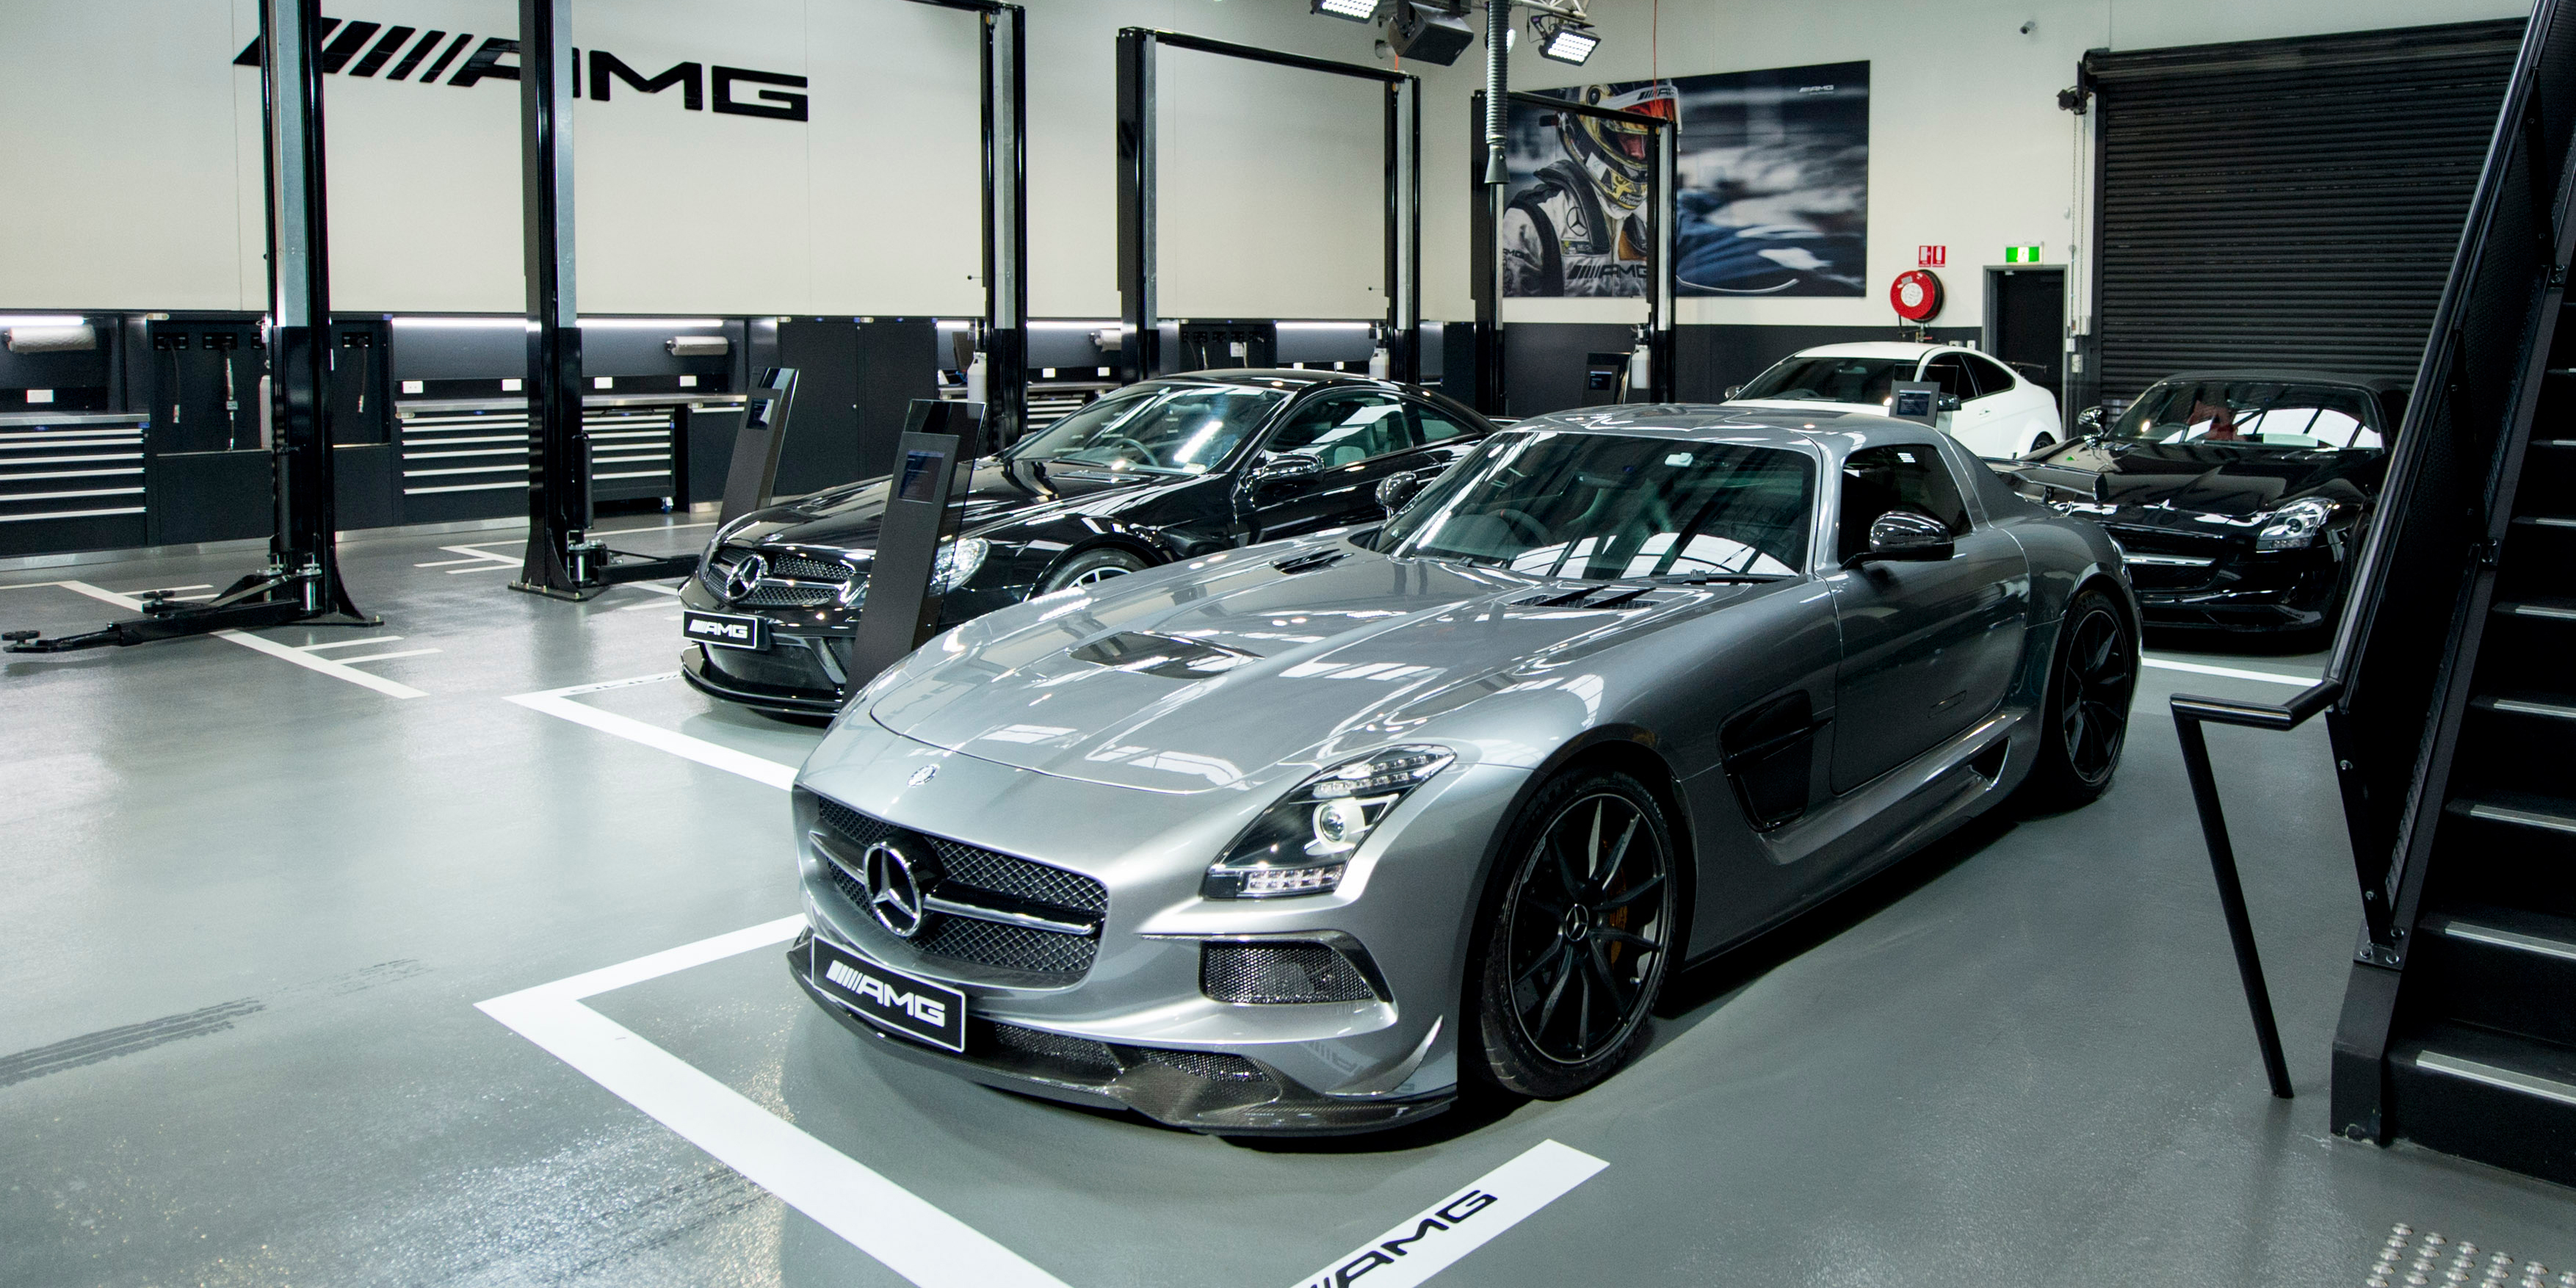 World's first MercedesAMG dealership opens in Sydney